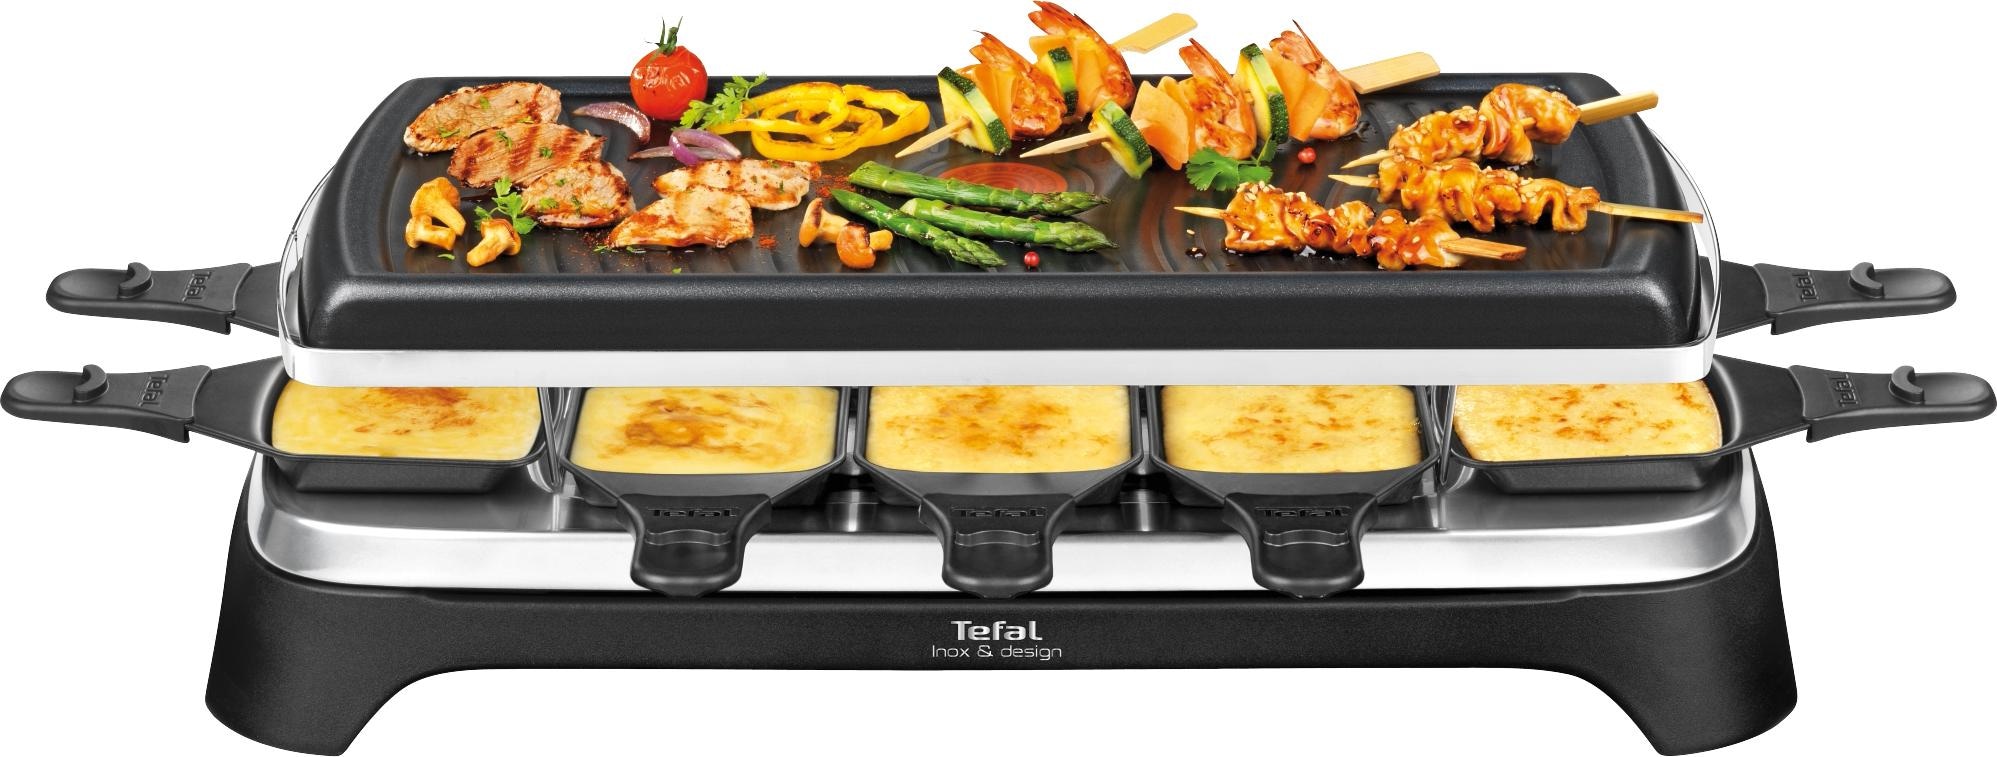 10 Raclette auf Raten Tefal 1350 Raclettepfännchen, RE4588, Watt kaufen